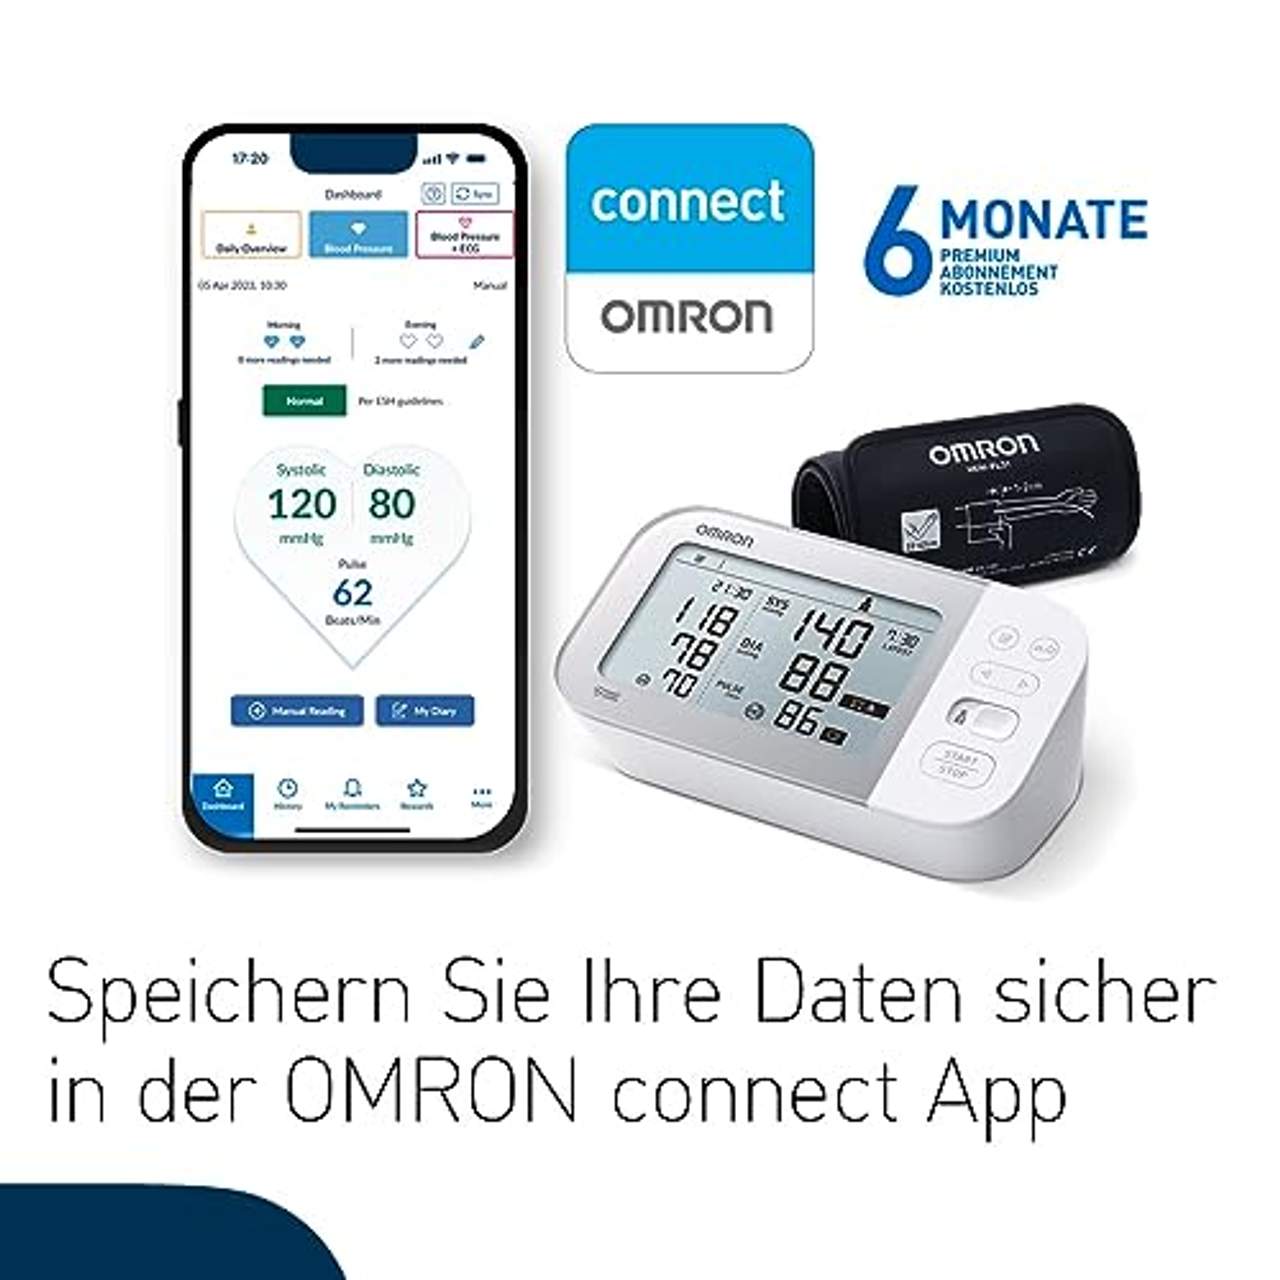 Omron X7 Smart Blutdruckmessgerät